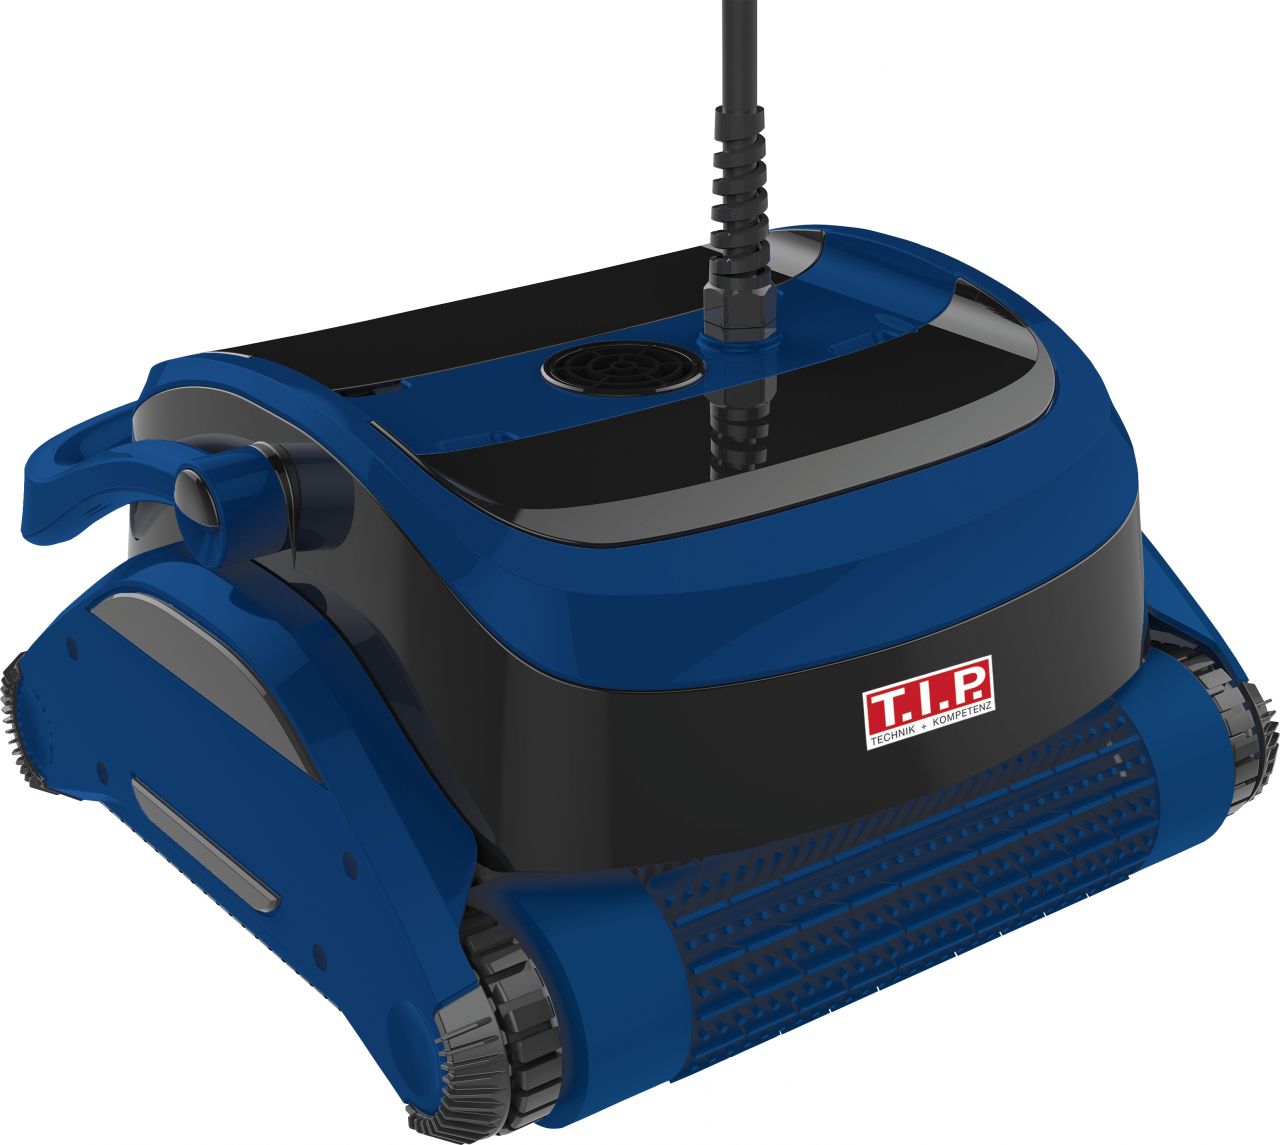 T.I.P. Poolroboter Sweeper 18000 3D schwarz/blau von T.I.P.